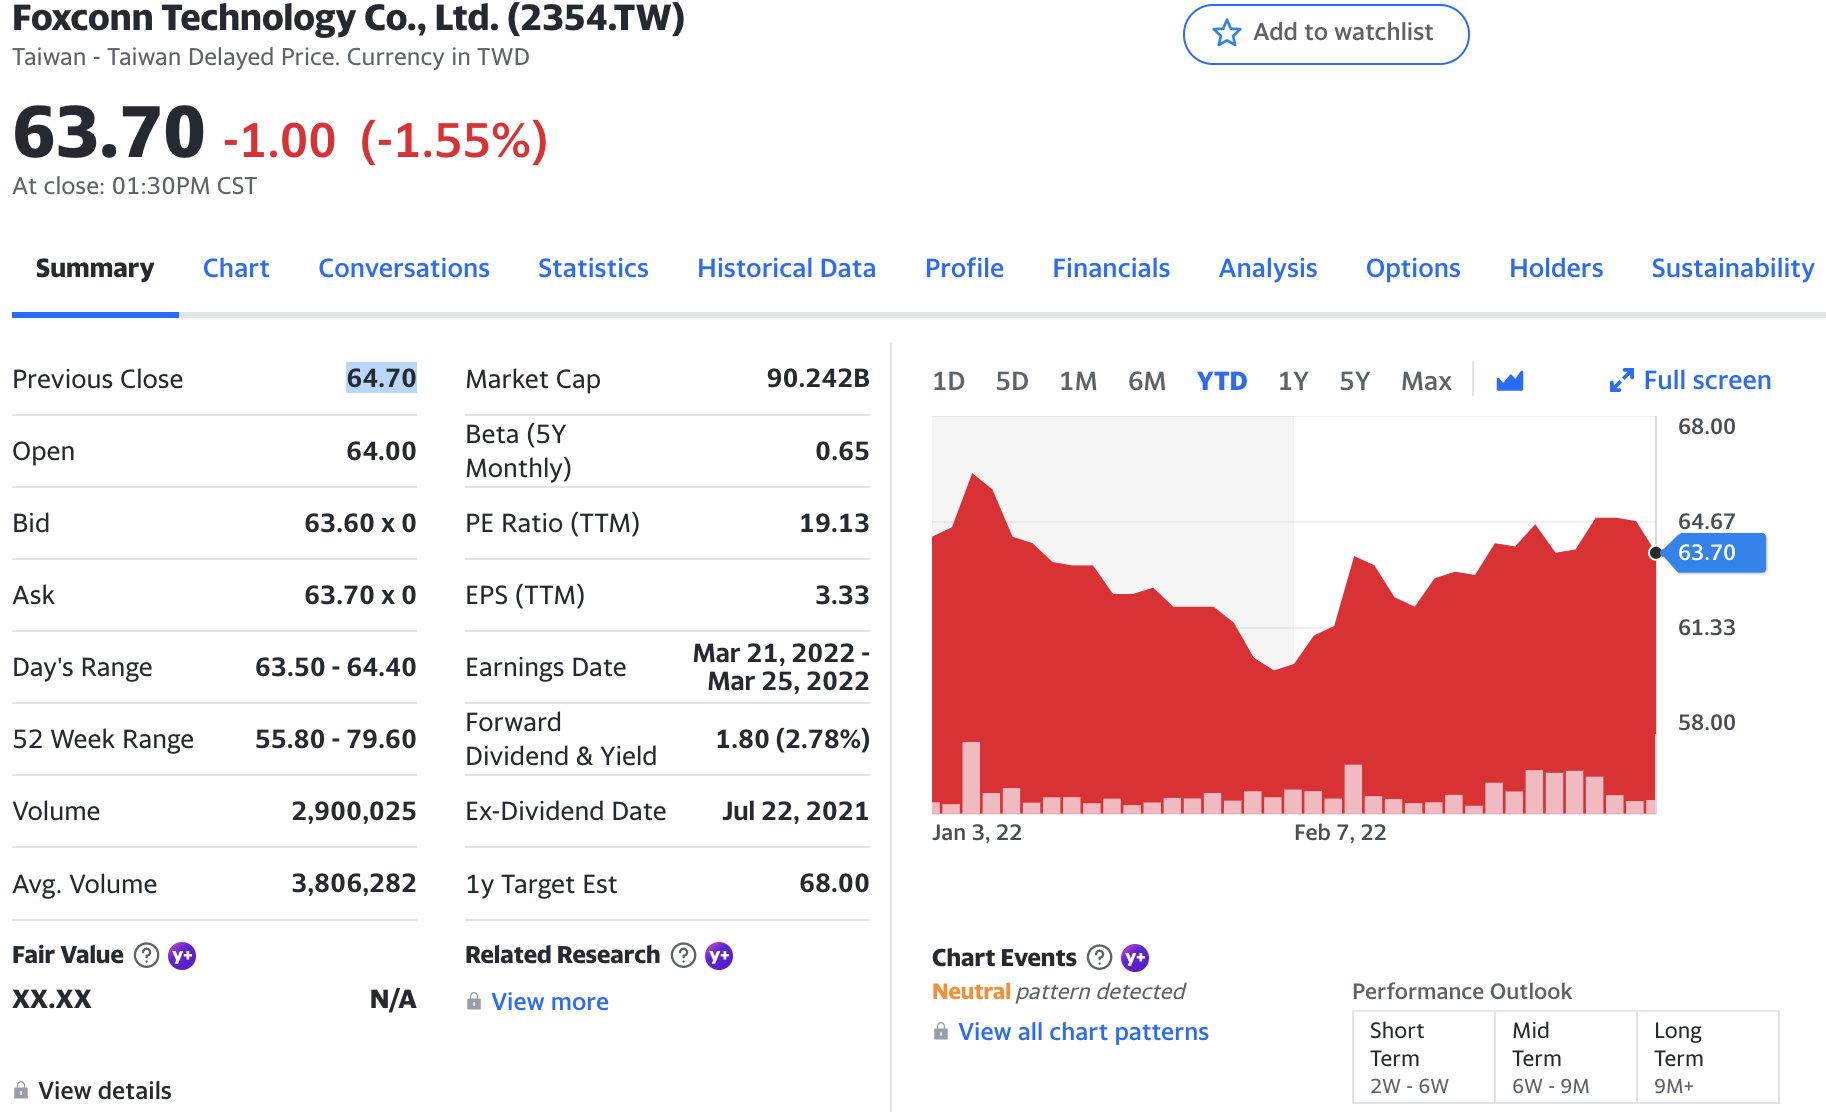 Yahoo! Finance: Foxconn Technology Co., Ltd. March 2022